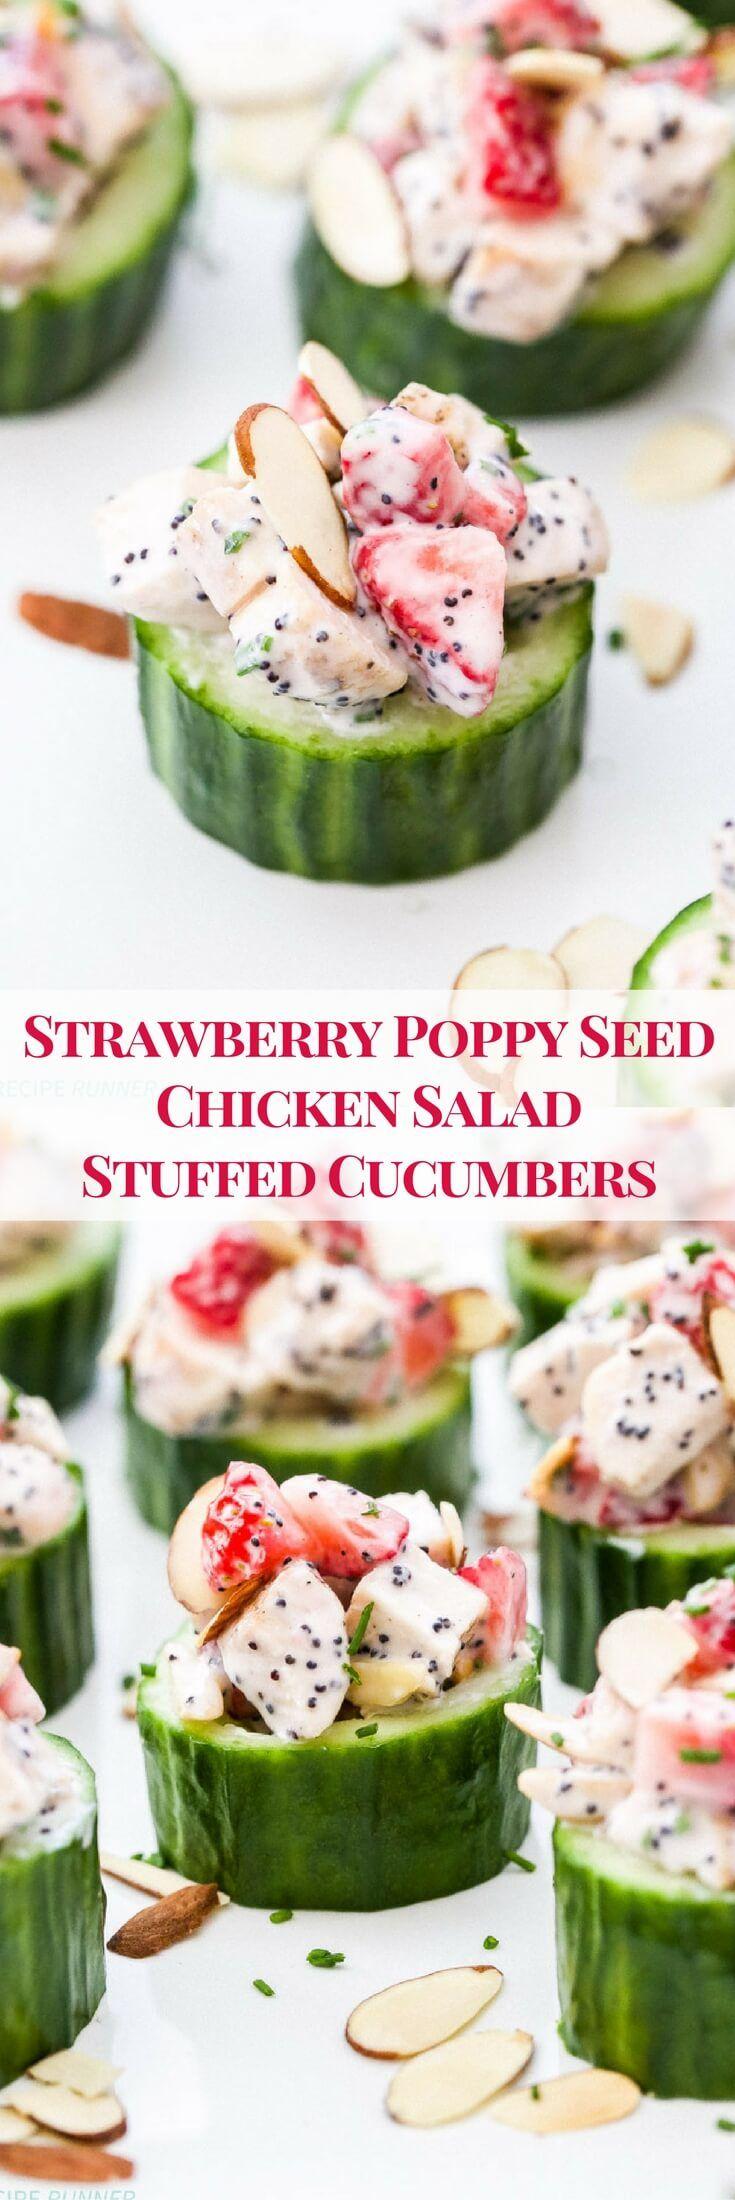 Wedding - Strawberry Poppy Seed Chicken Salad Stuffed Cucumbers